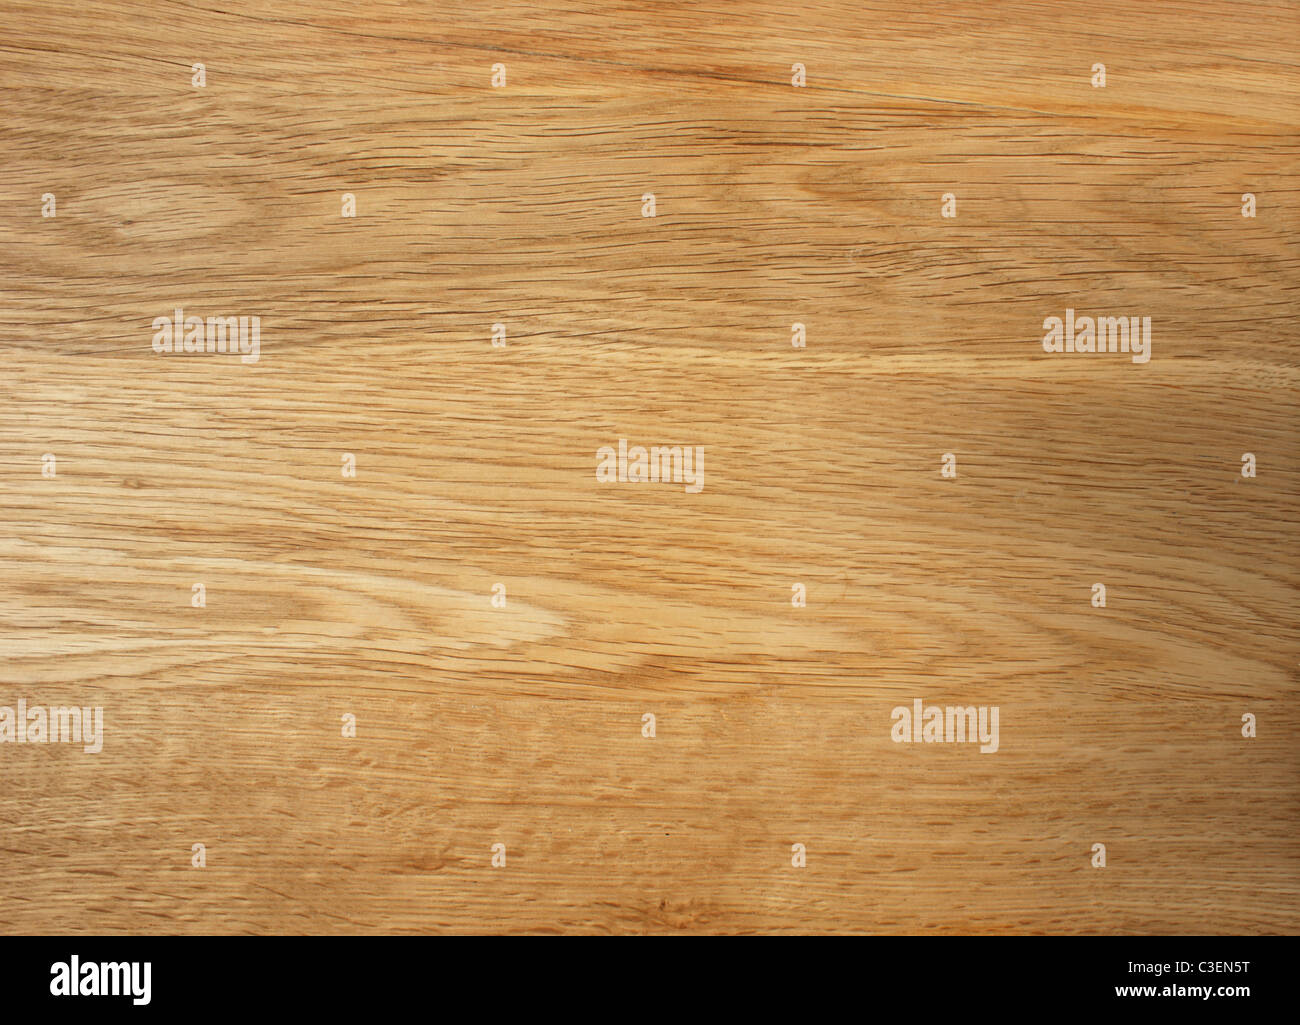 Textured wood background Stock Photo